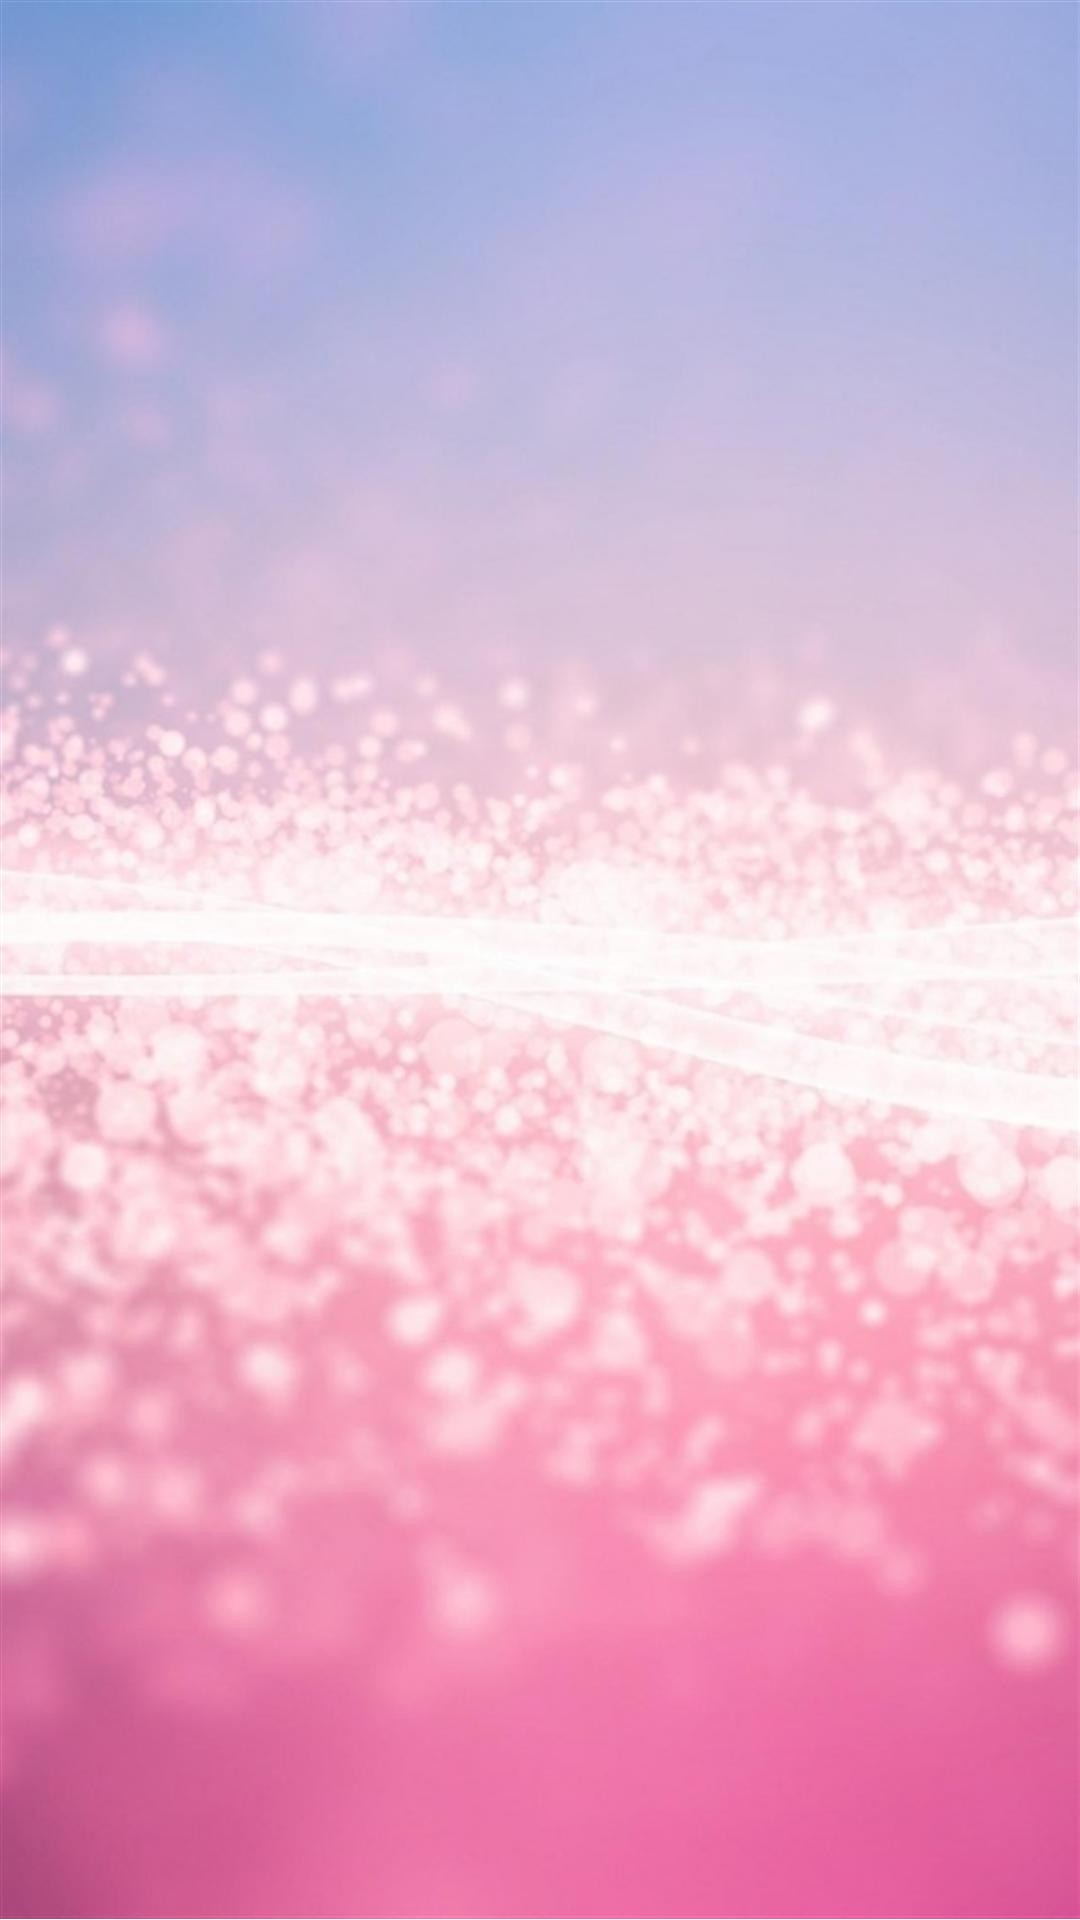 Pink Glitter Stardust iPhone 6 Wallpaper Download iPhone Wallpapers 1080x1920